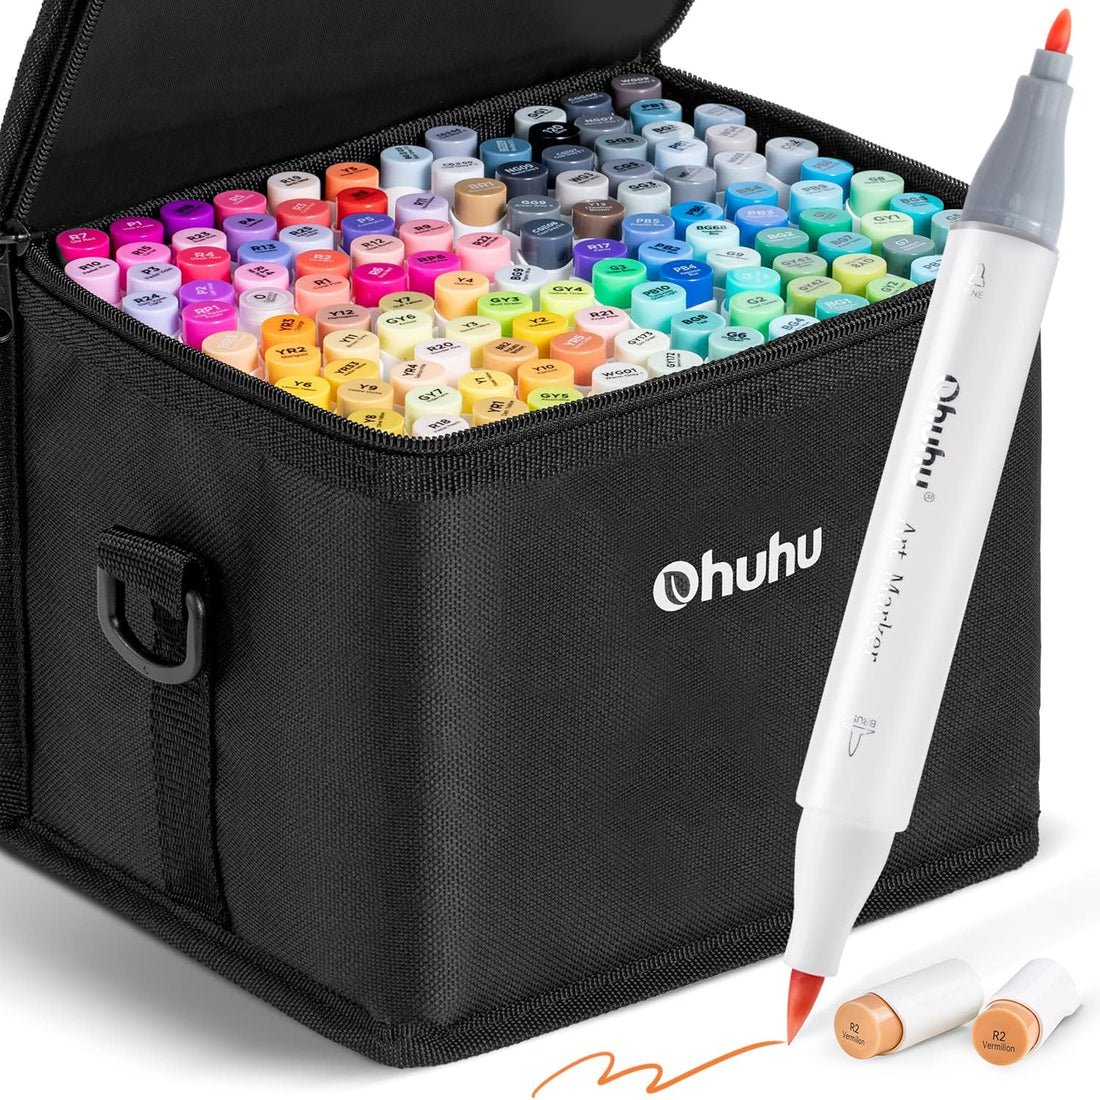 Ohuhu Honolulu B - Dual Tip Alcohol Art Markers - 120 Colors Set Plus 1 Colorless Blender - Brush & Fine Tip - merriartist.com